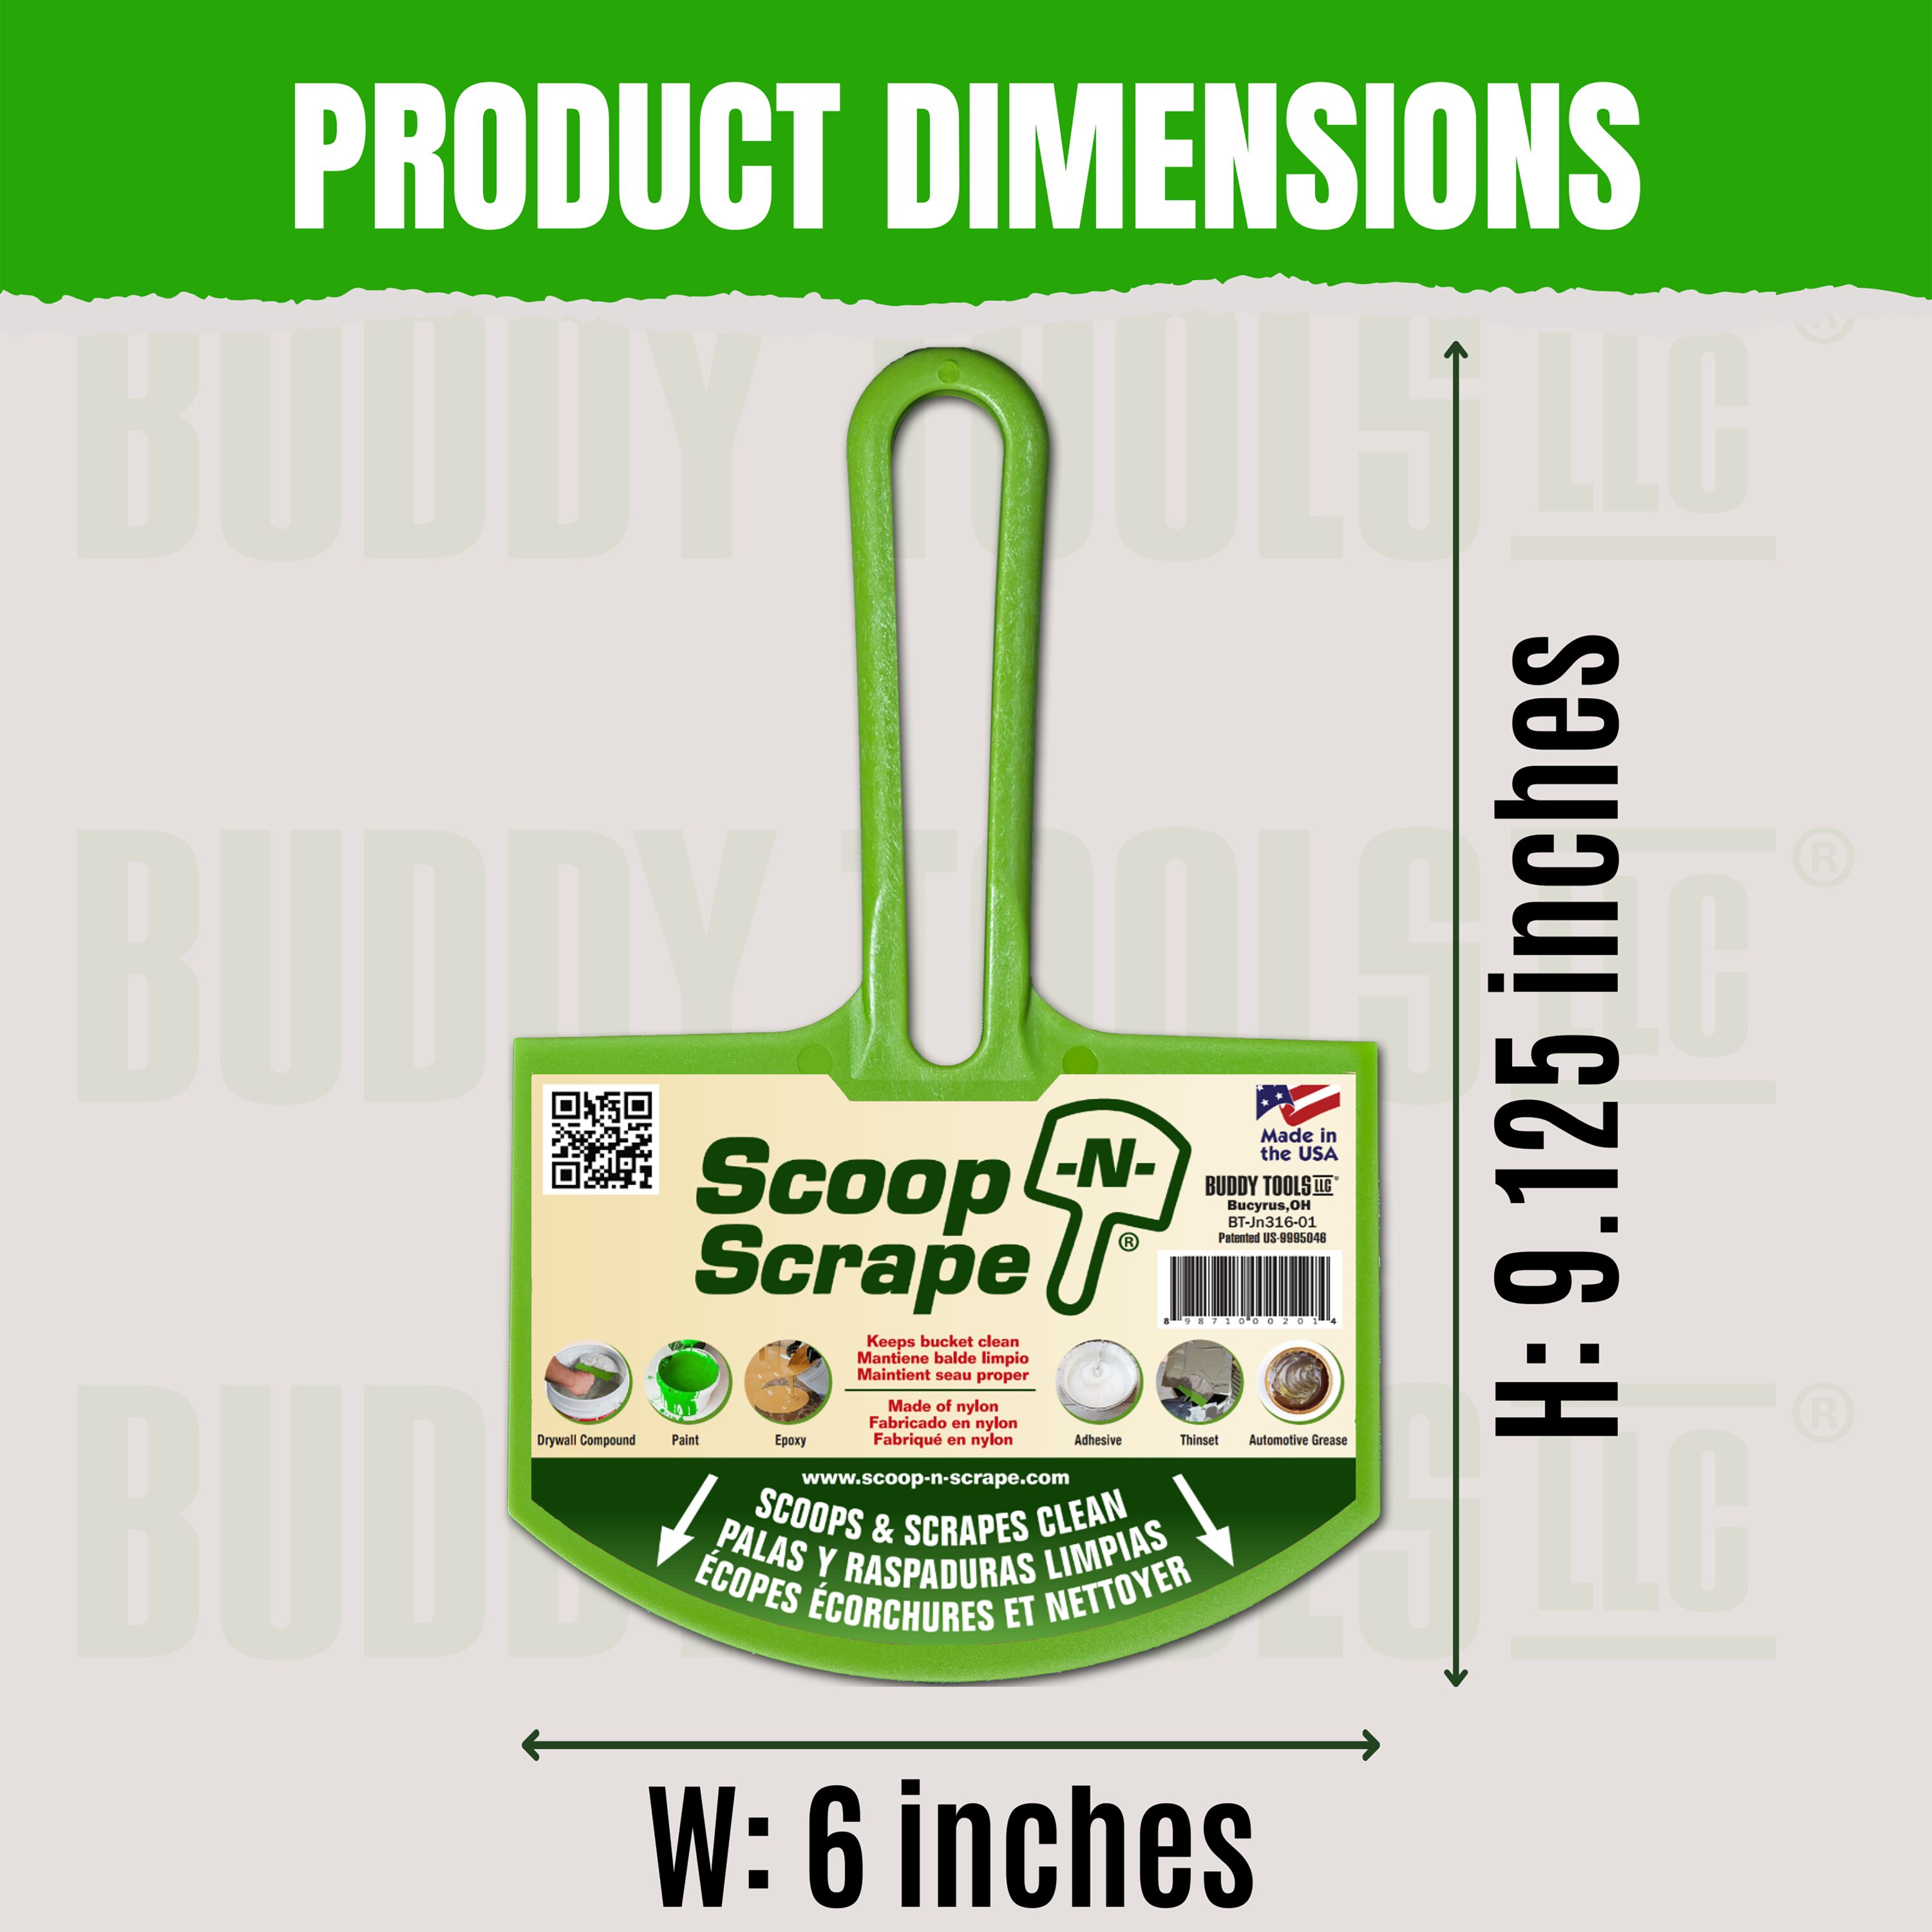 Buddy Tools Scoop-N-Scrape 1 5-Gallon Green High-density Nylon